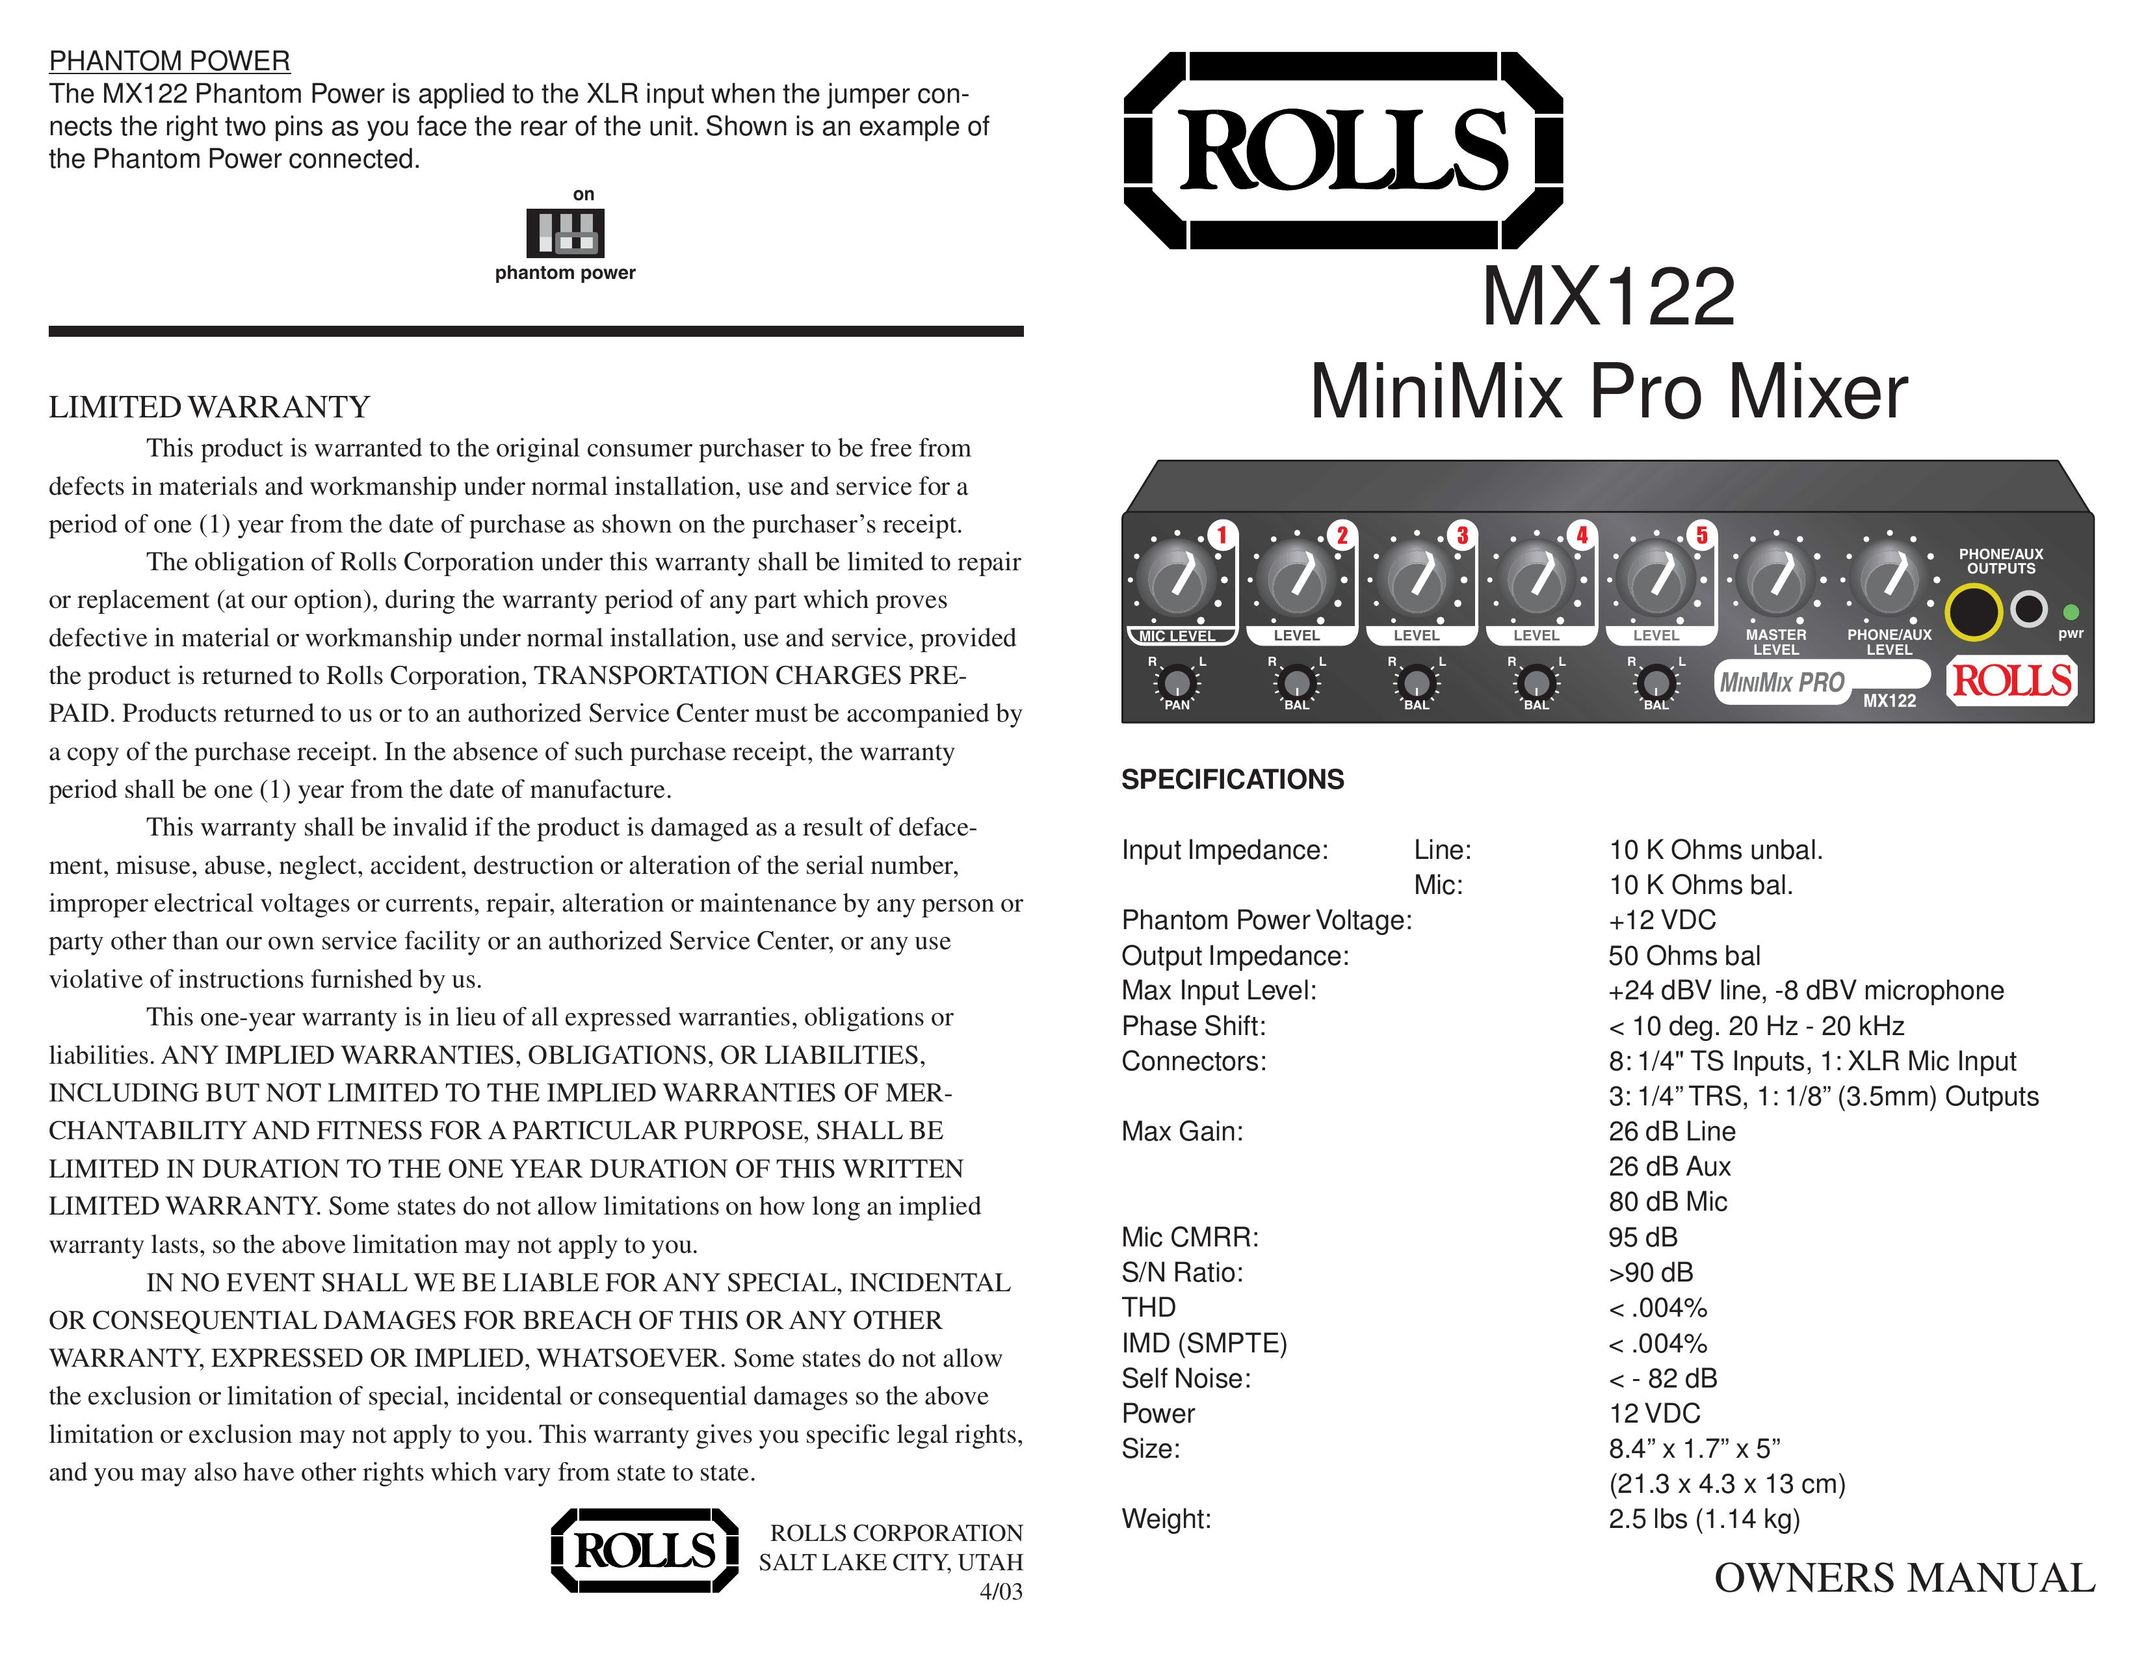 Rolls MX122 Portable Multimedia Player User Manual